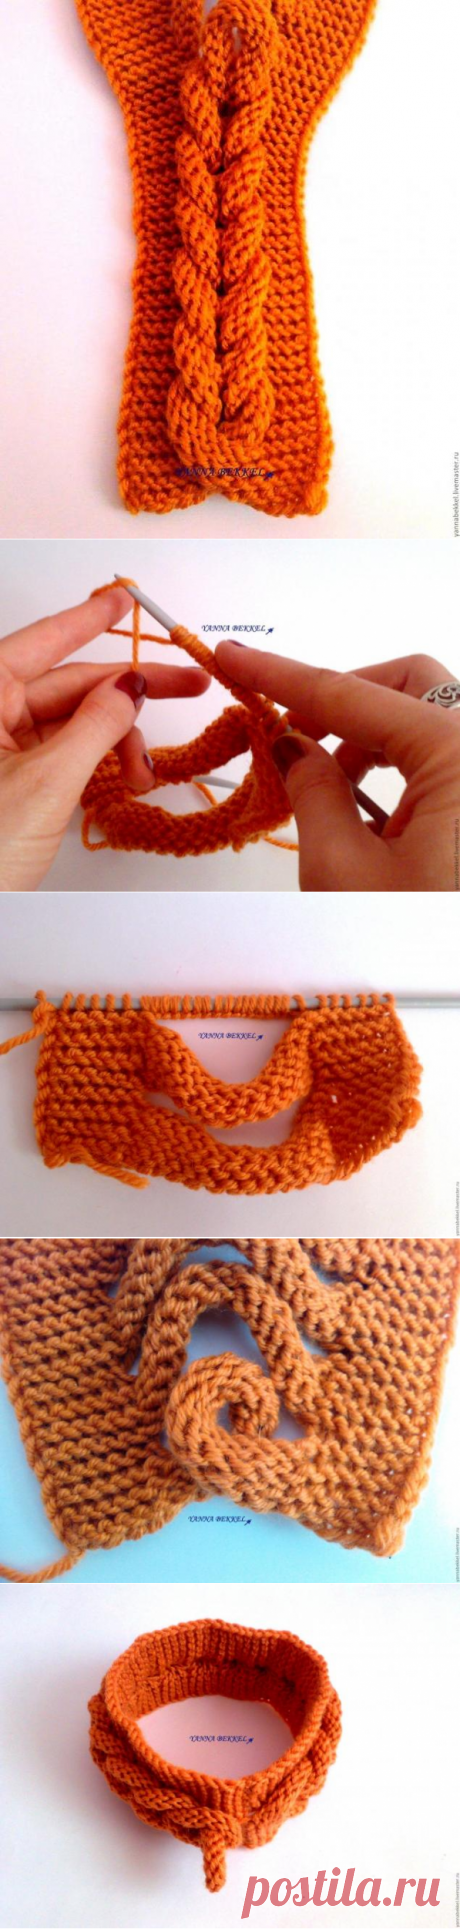 Плетение и вязание колоска.